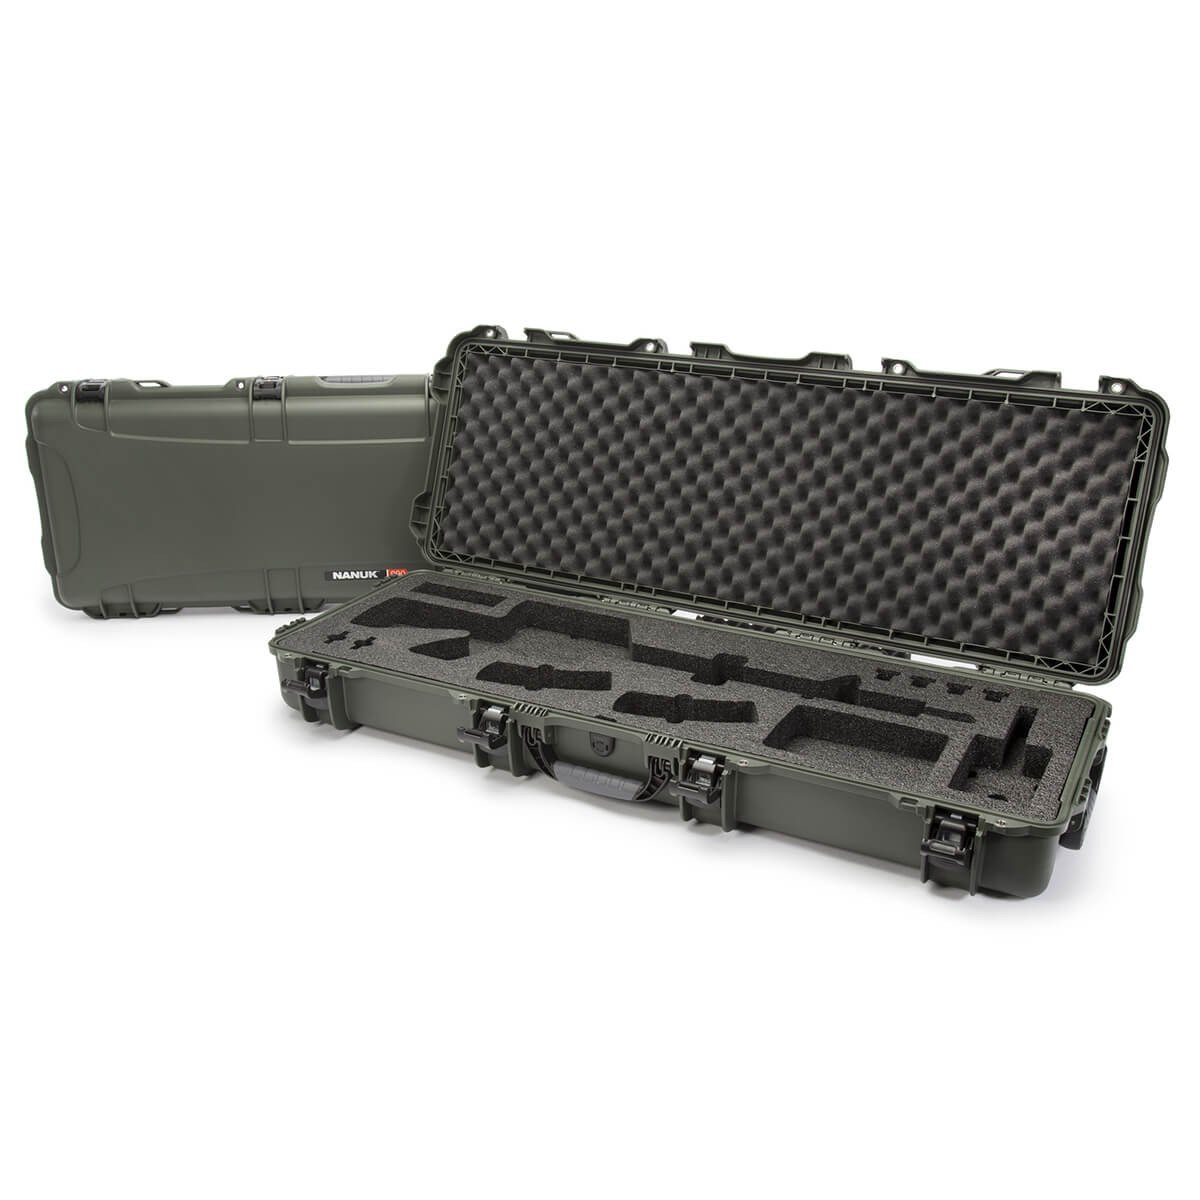 NANUK 990 AR - valise pour armes à feu - en direct - NANUK